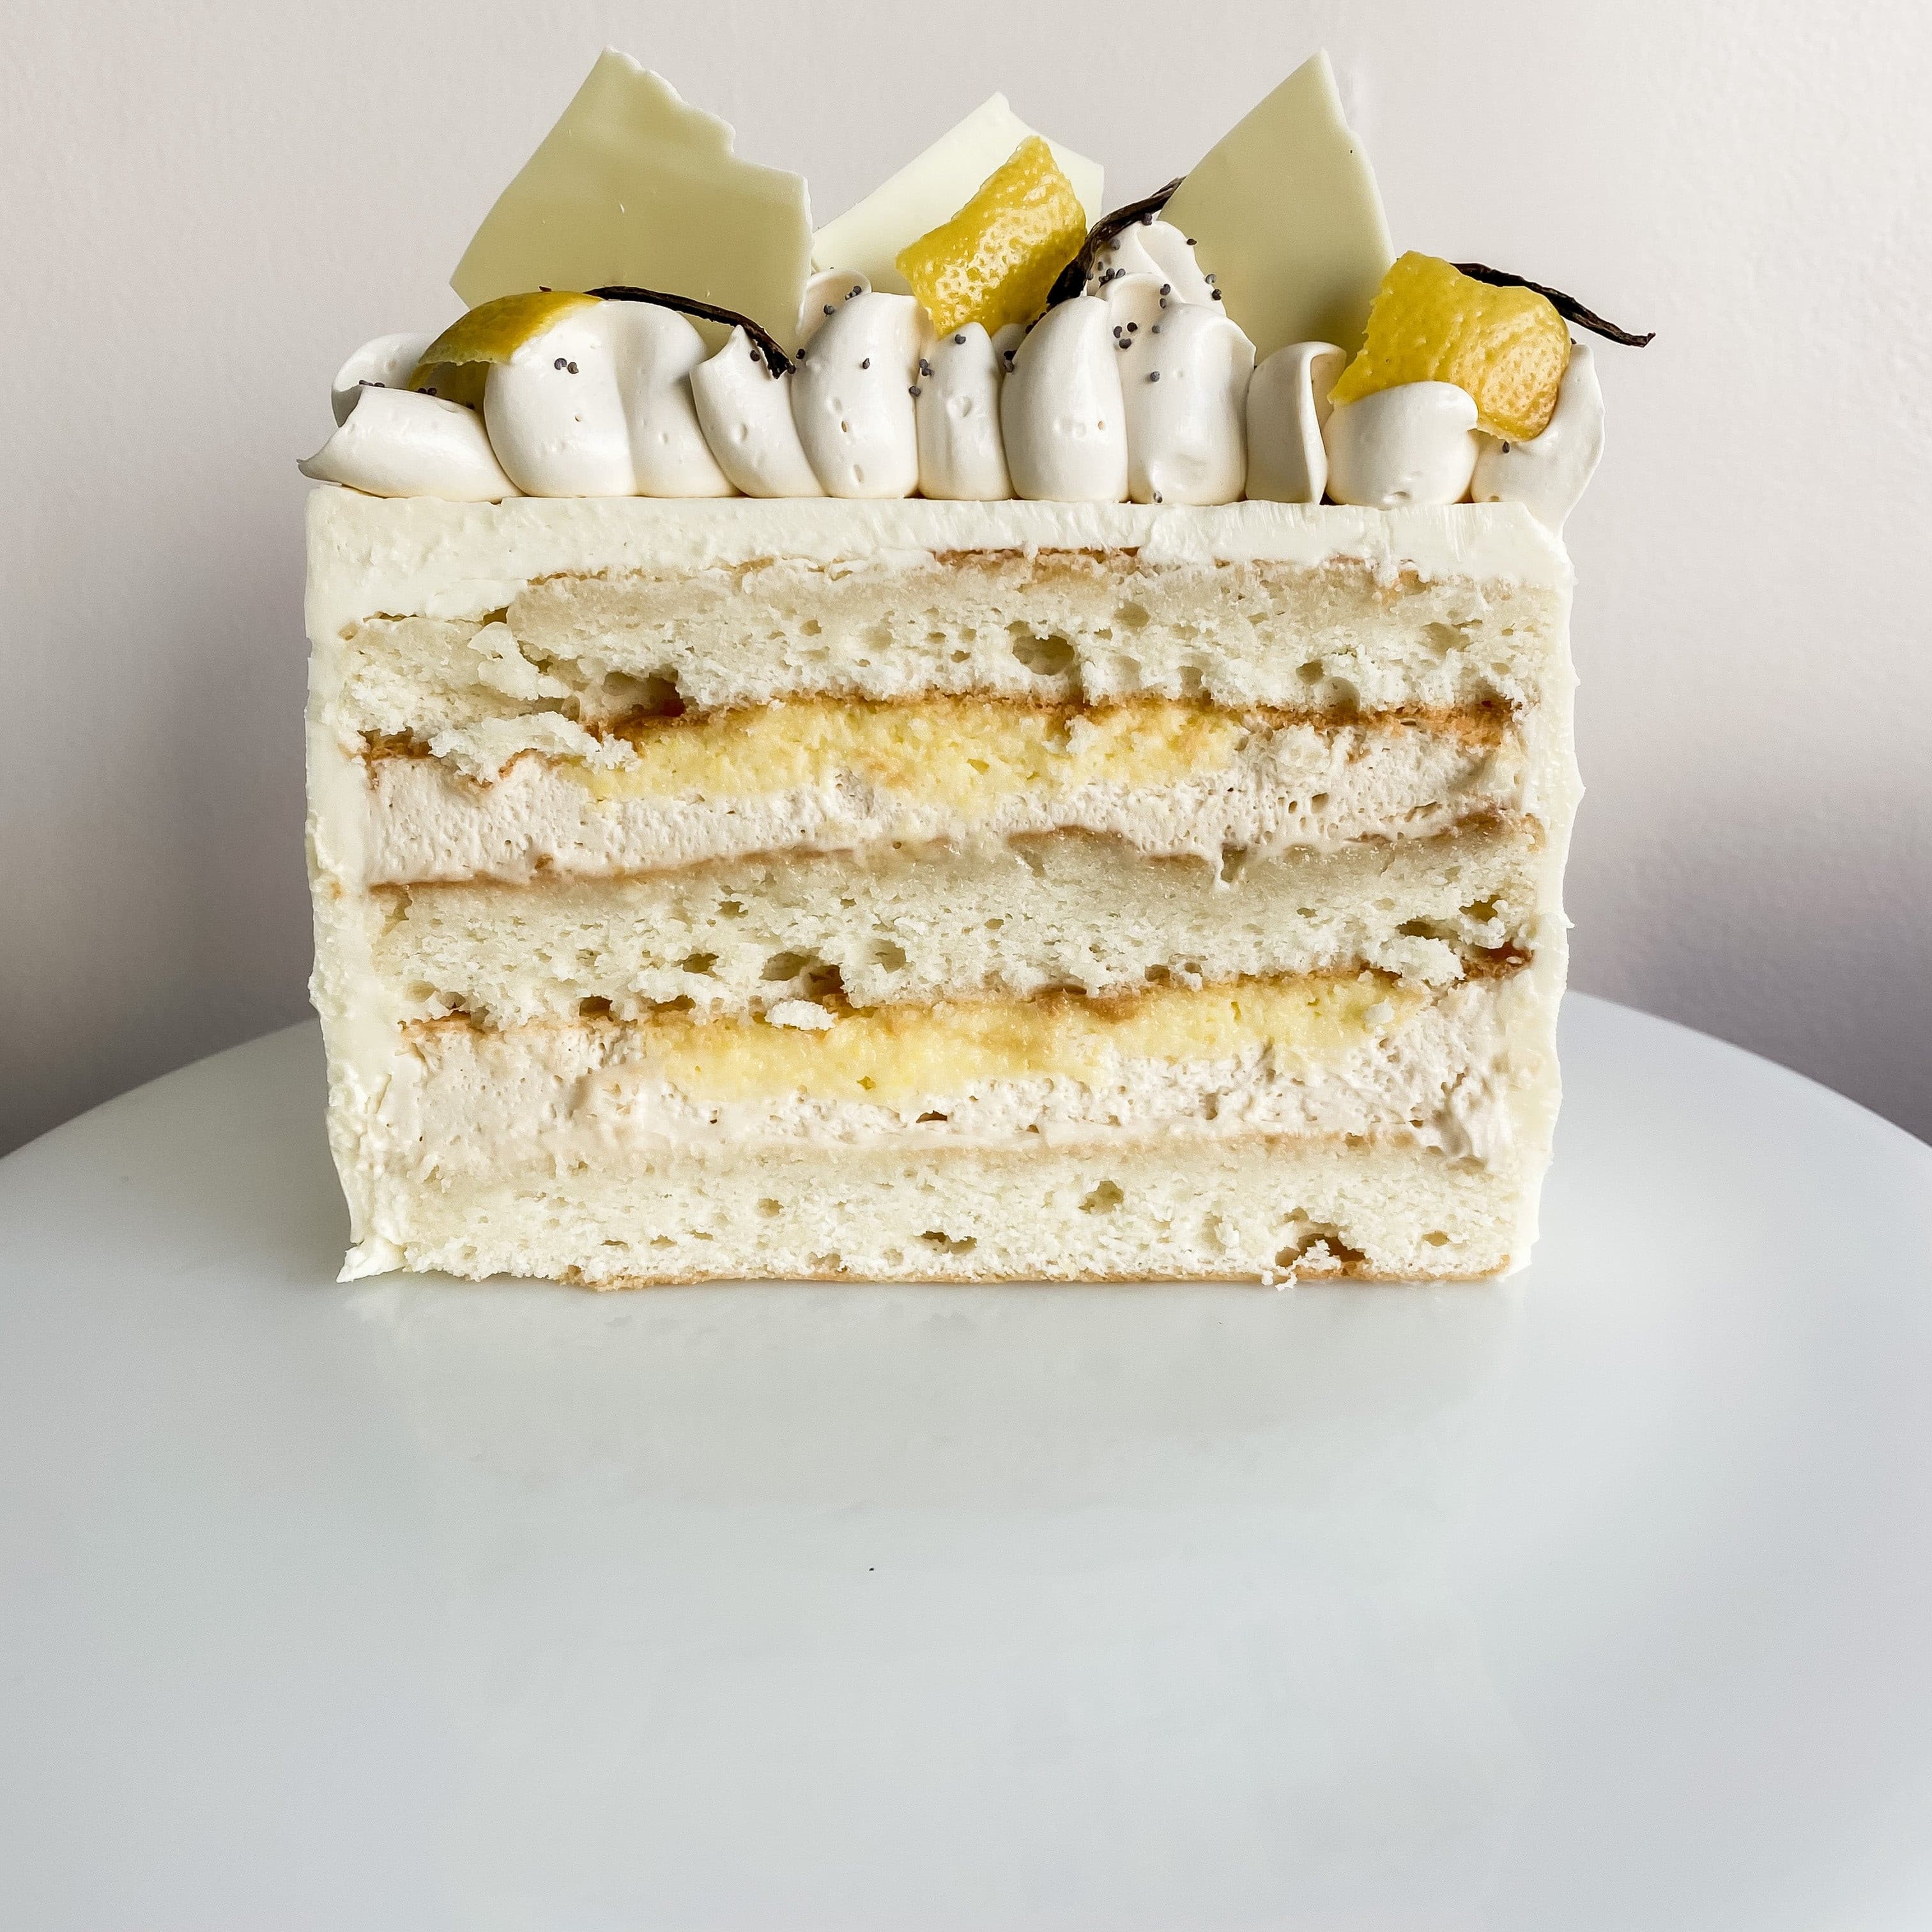 Vanilla and lemon mounted cake